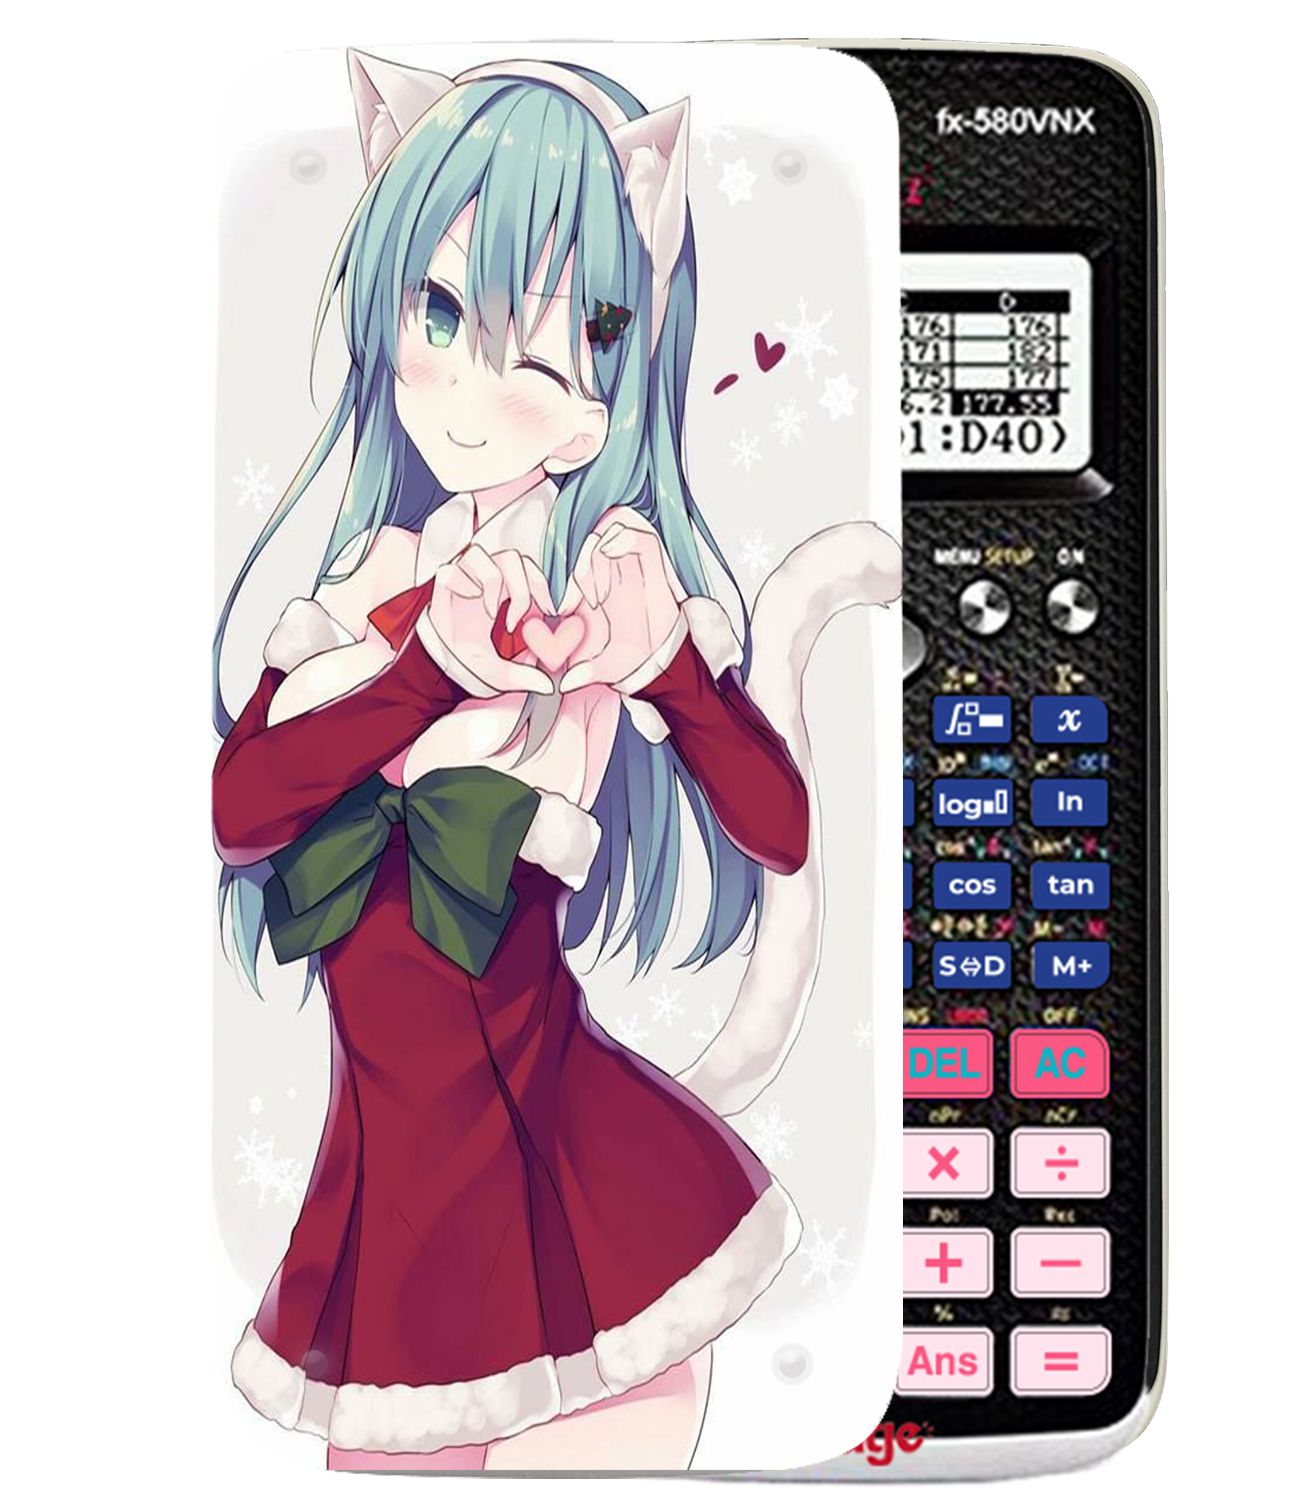 Ốp máy tính Casio FX 580 VNX Nhân vật Anime TAM 058